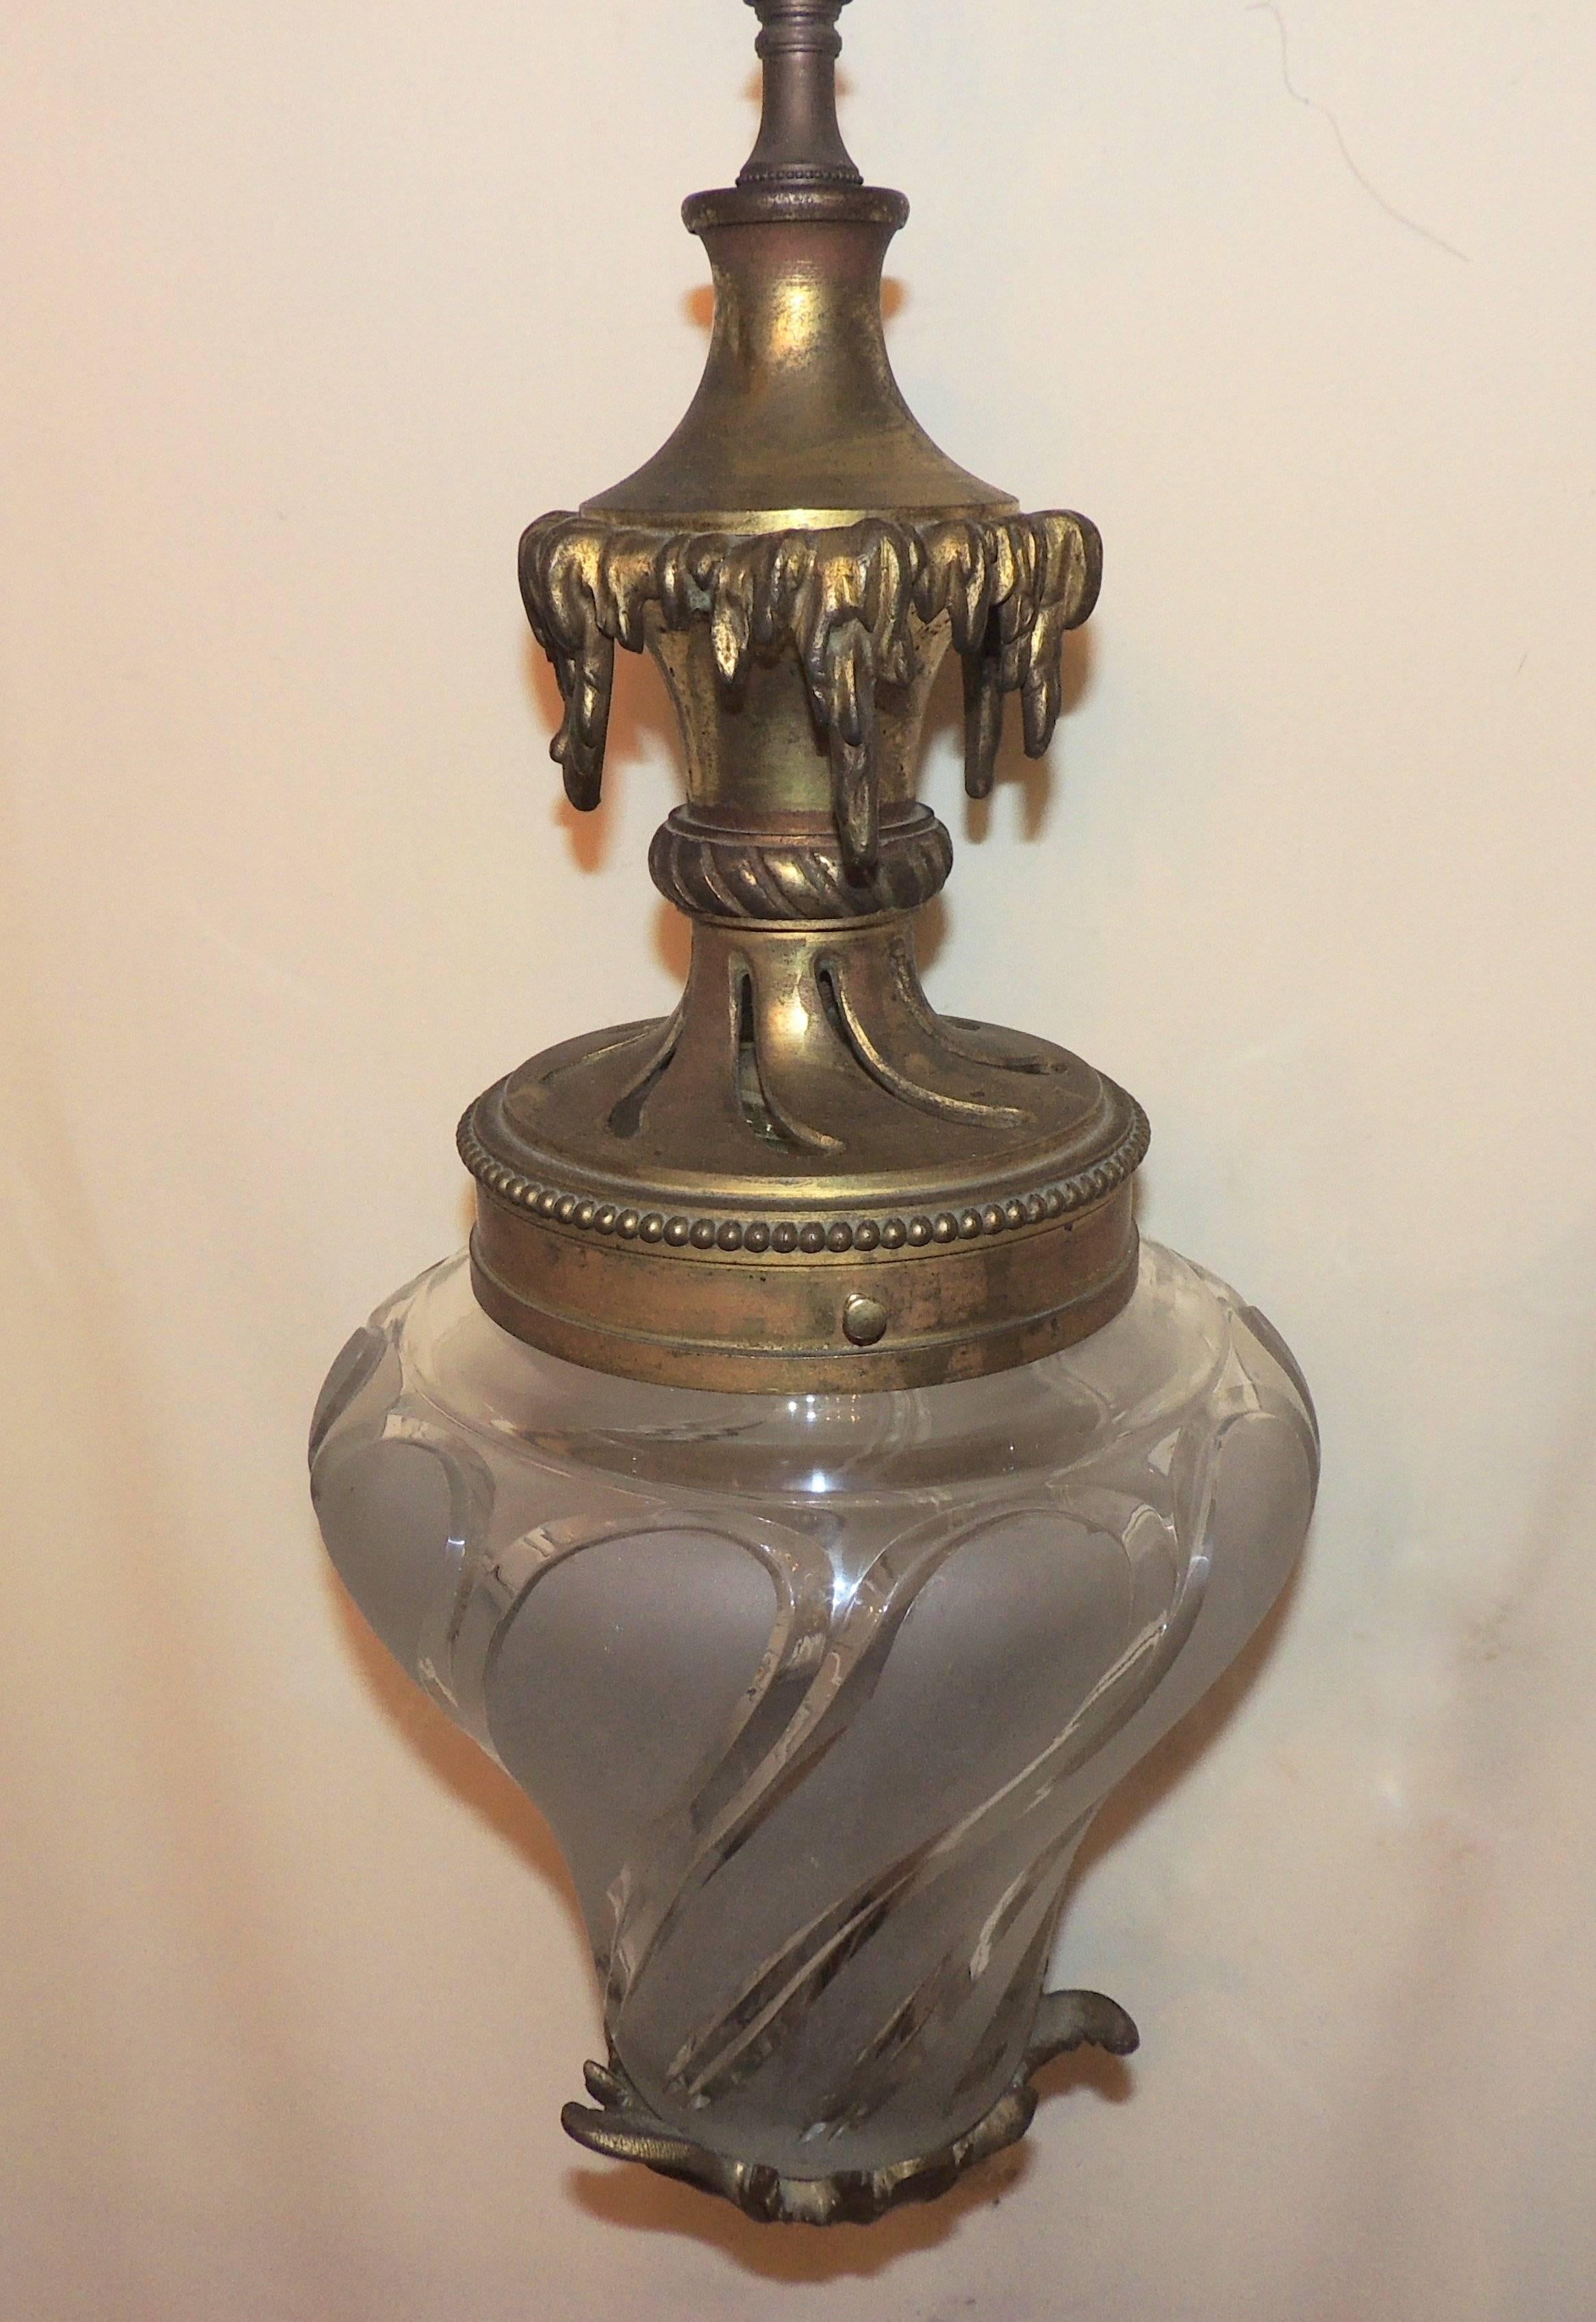 Wonderful French bronze filigree frosted swirl beveled glass lantern fixture.

Measures: 22